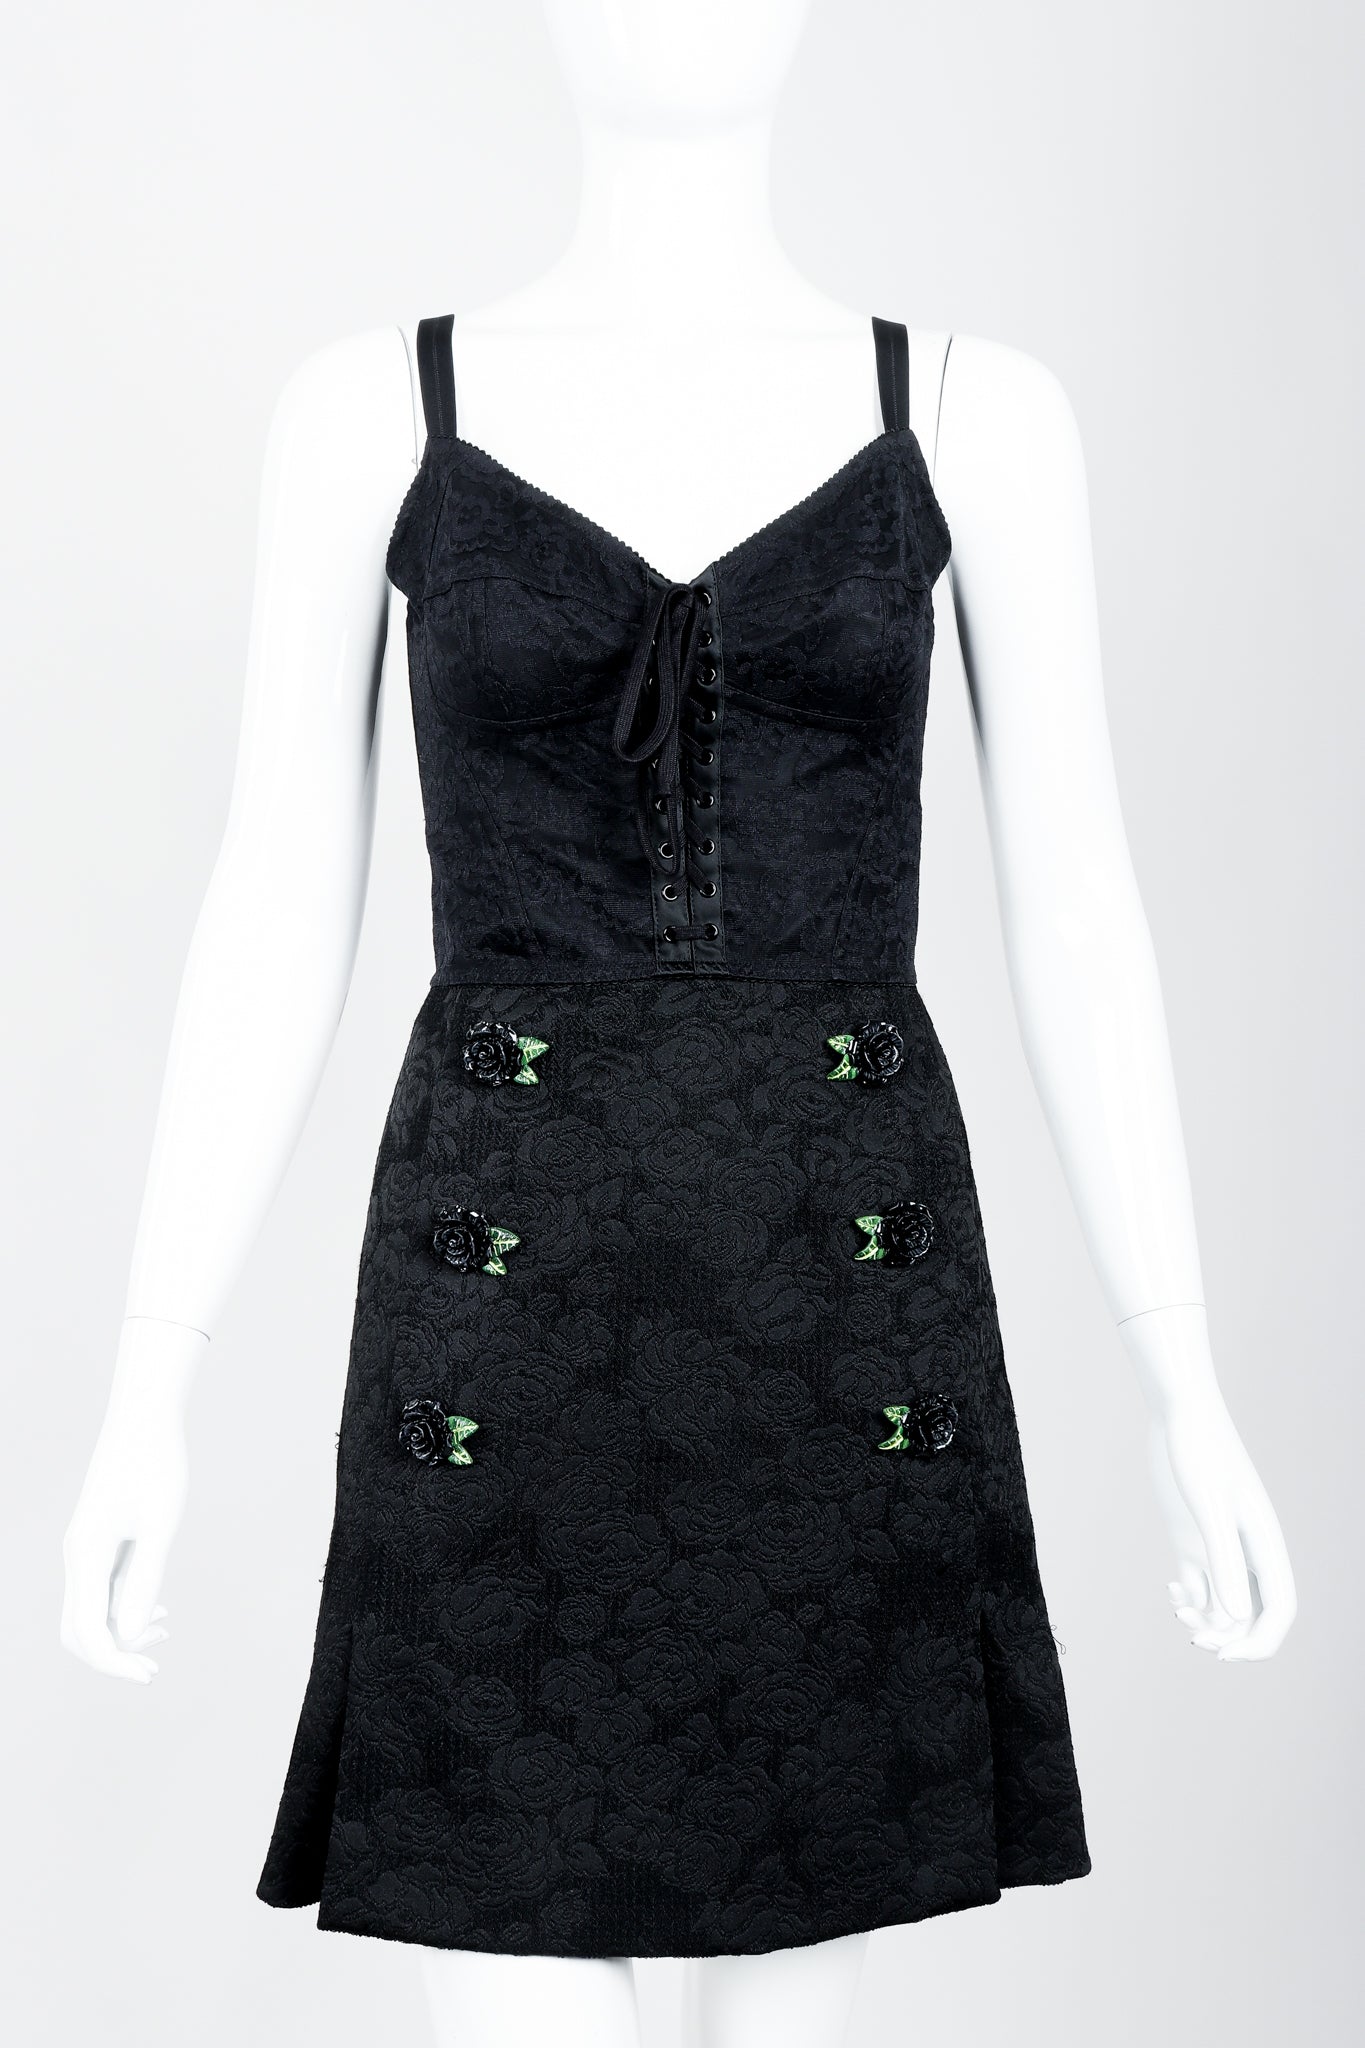 Vintage Dolce & Gabbana Lace Rosette Bustier Slip Dress on Mannequin front crop at Recess